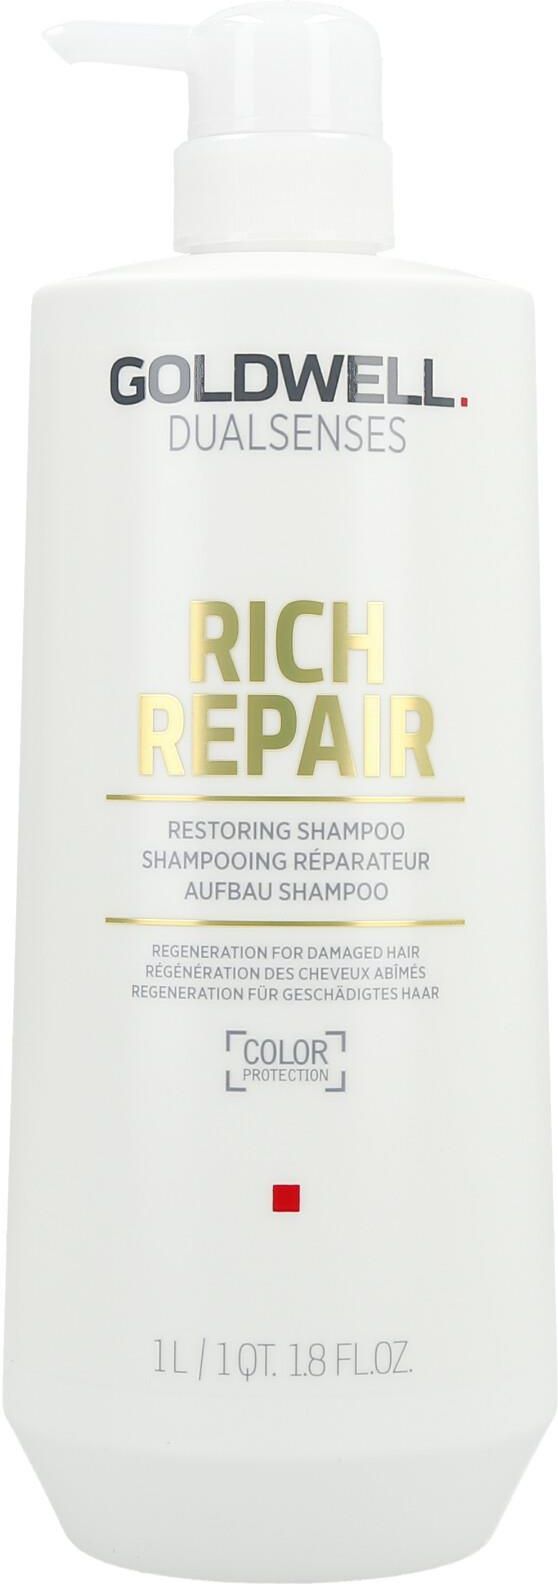 szampon goldwell rich repair opinie